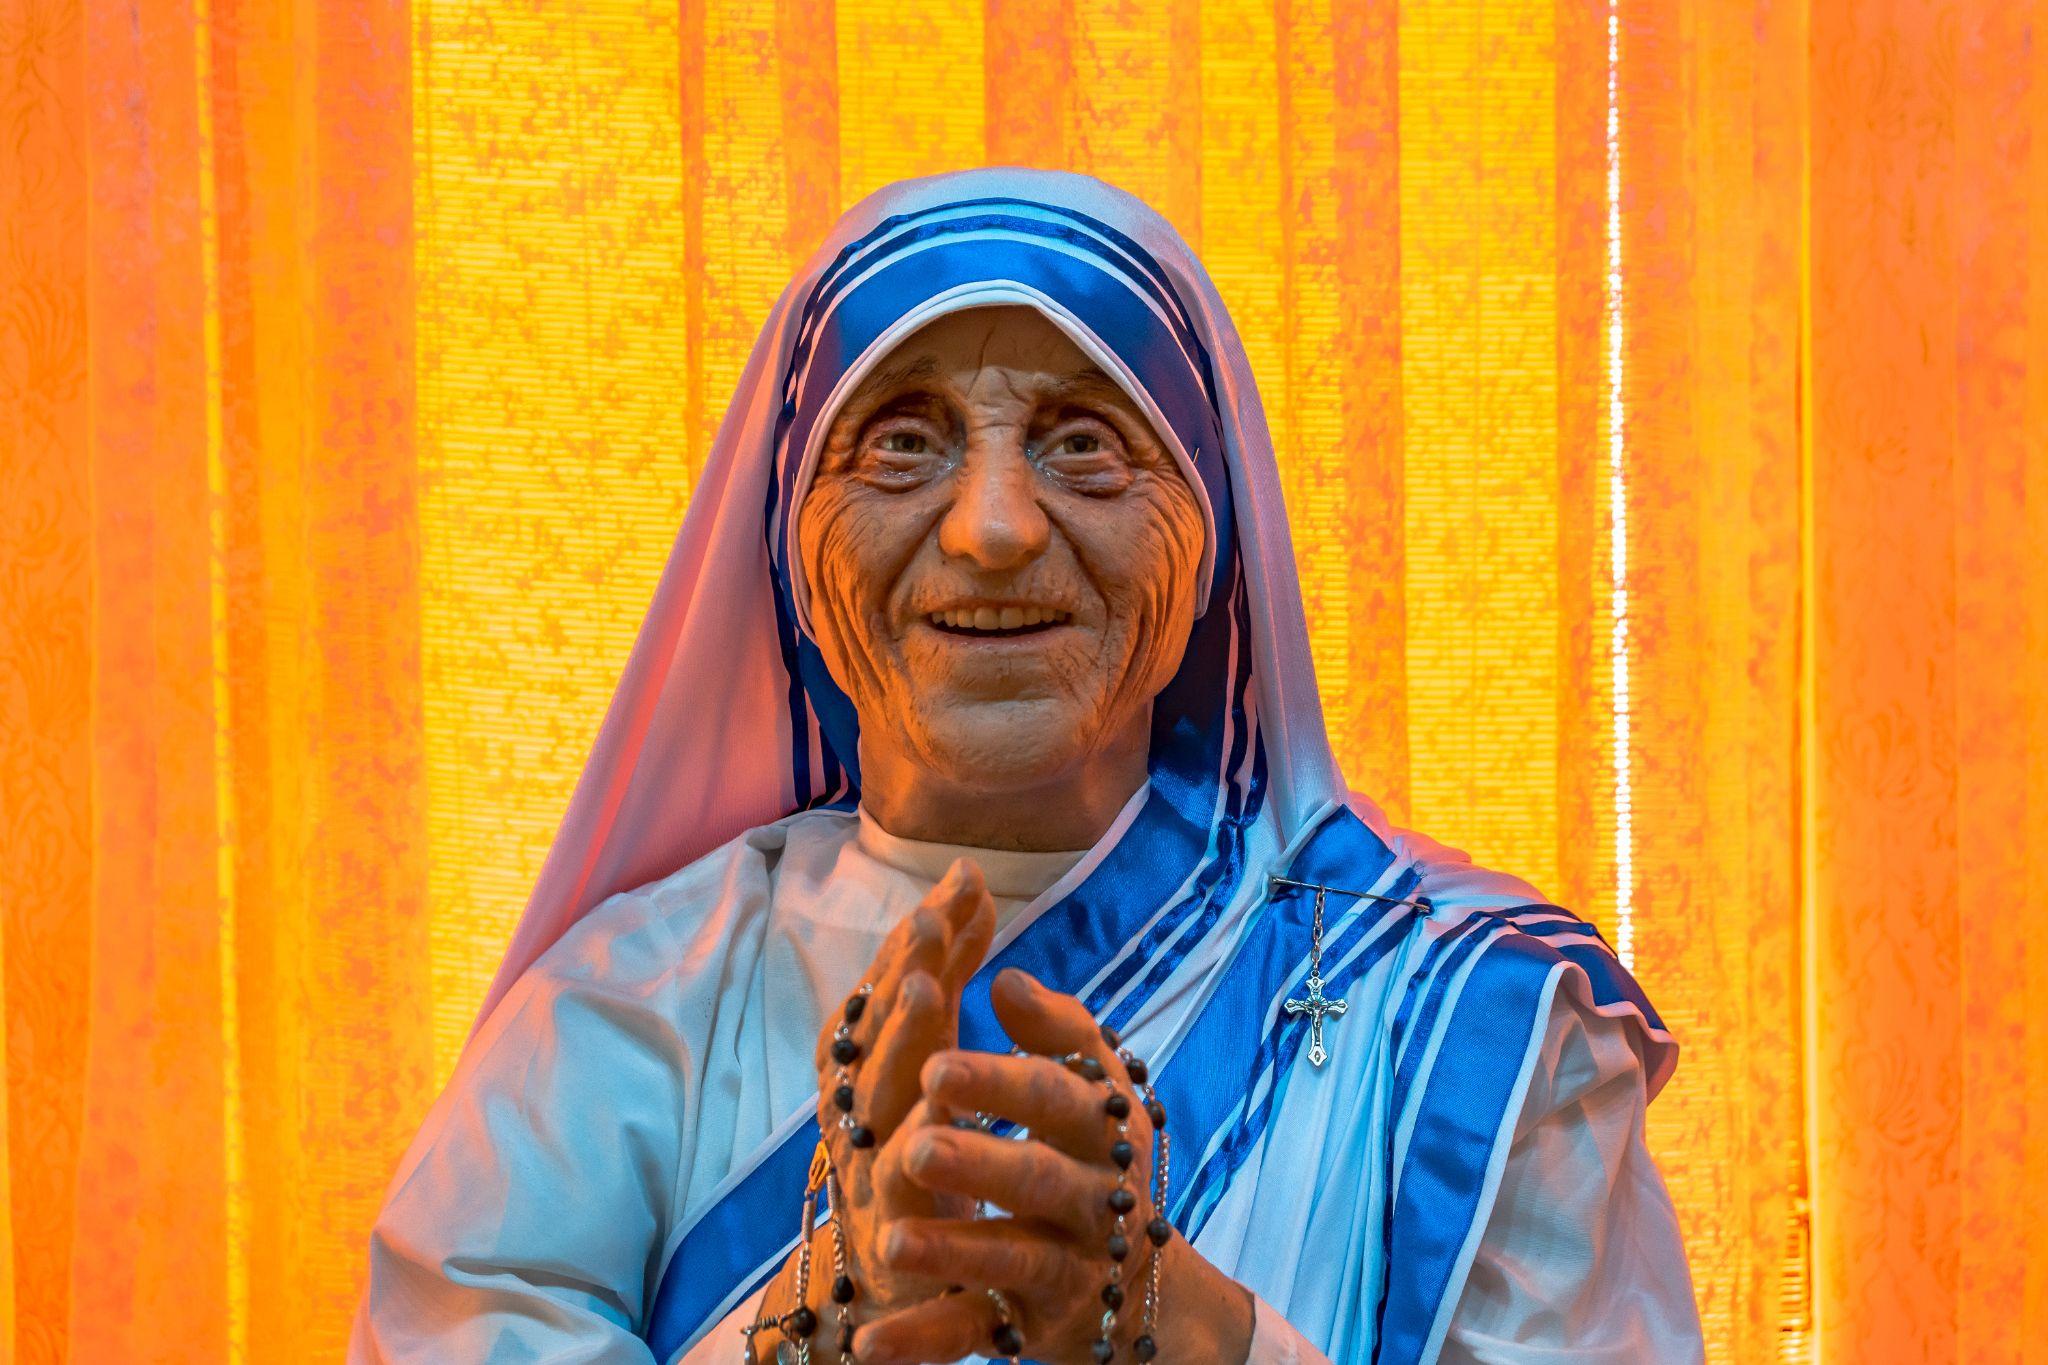 Mother Teresa sculpture 